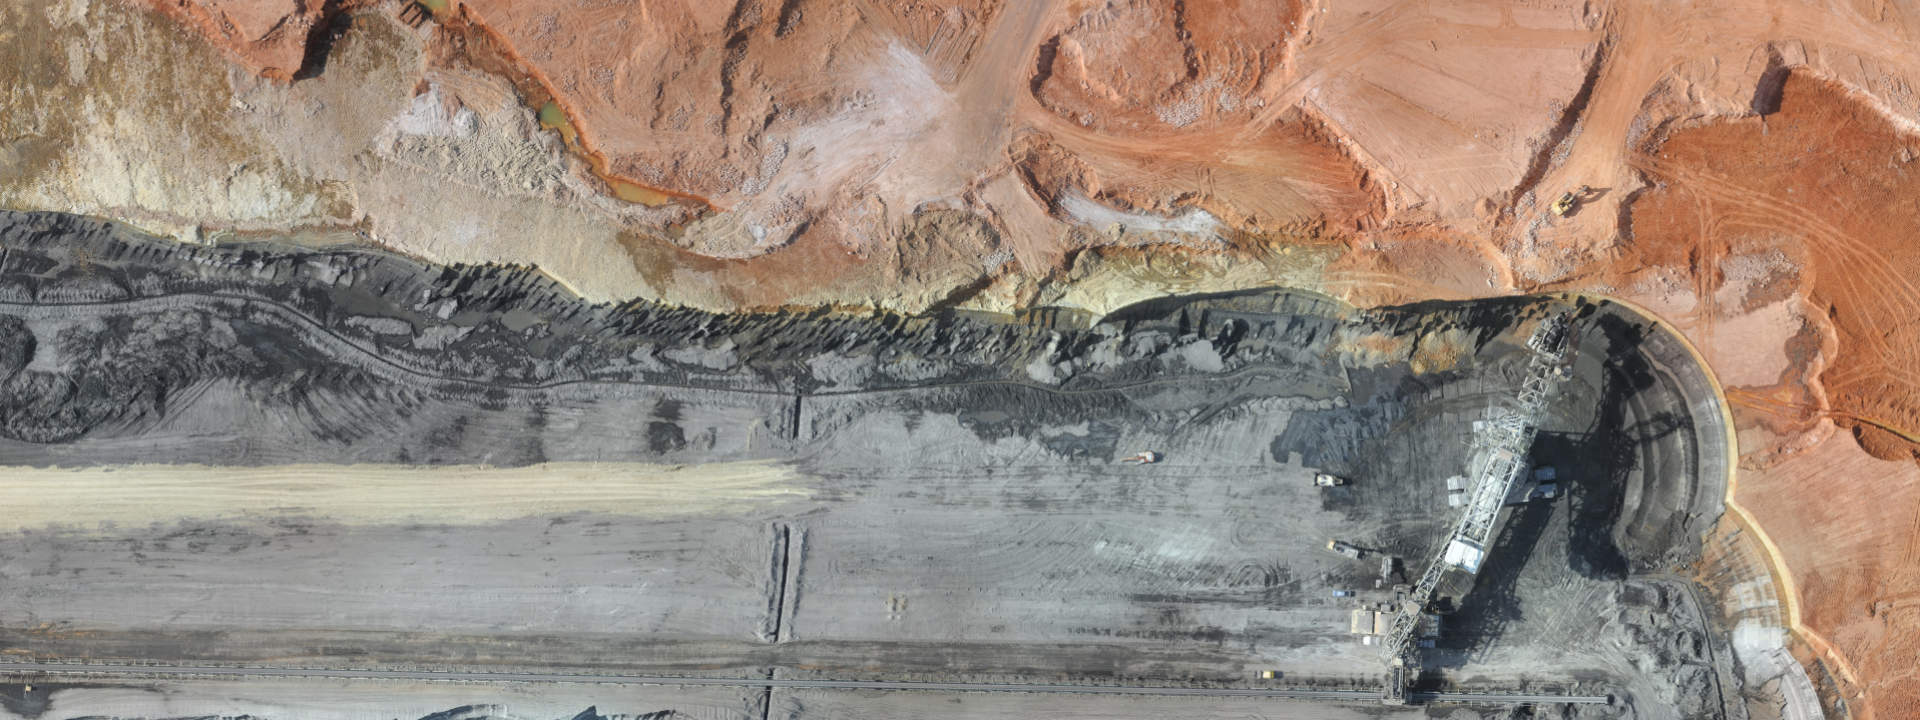 Excavation progress over Kardia mine